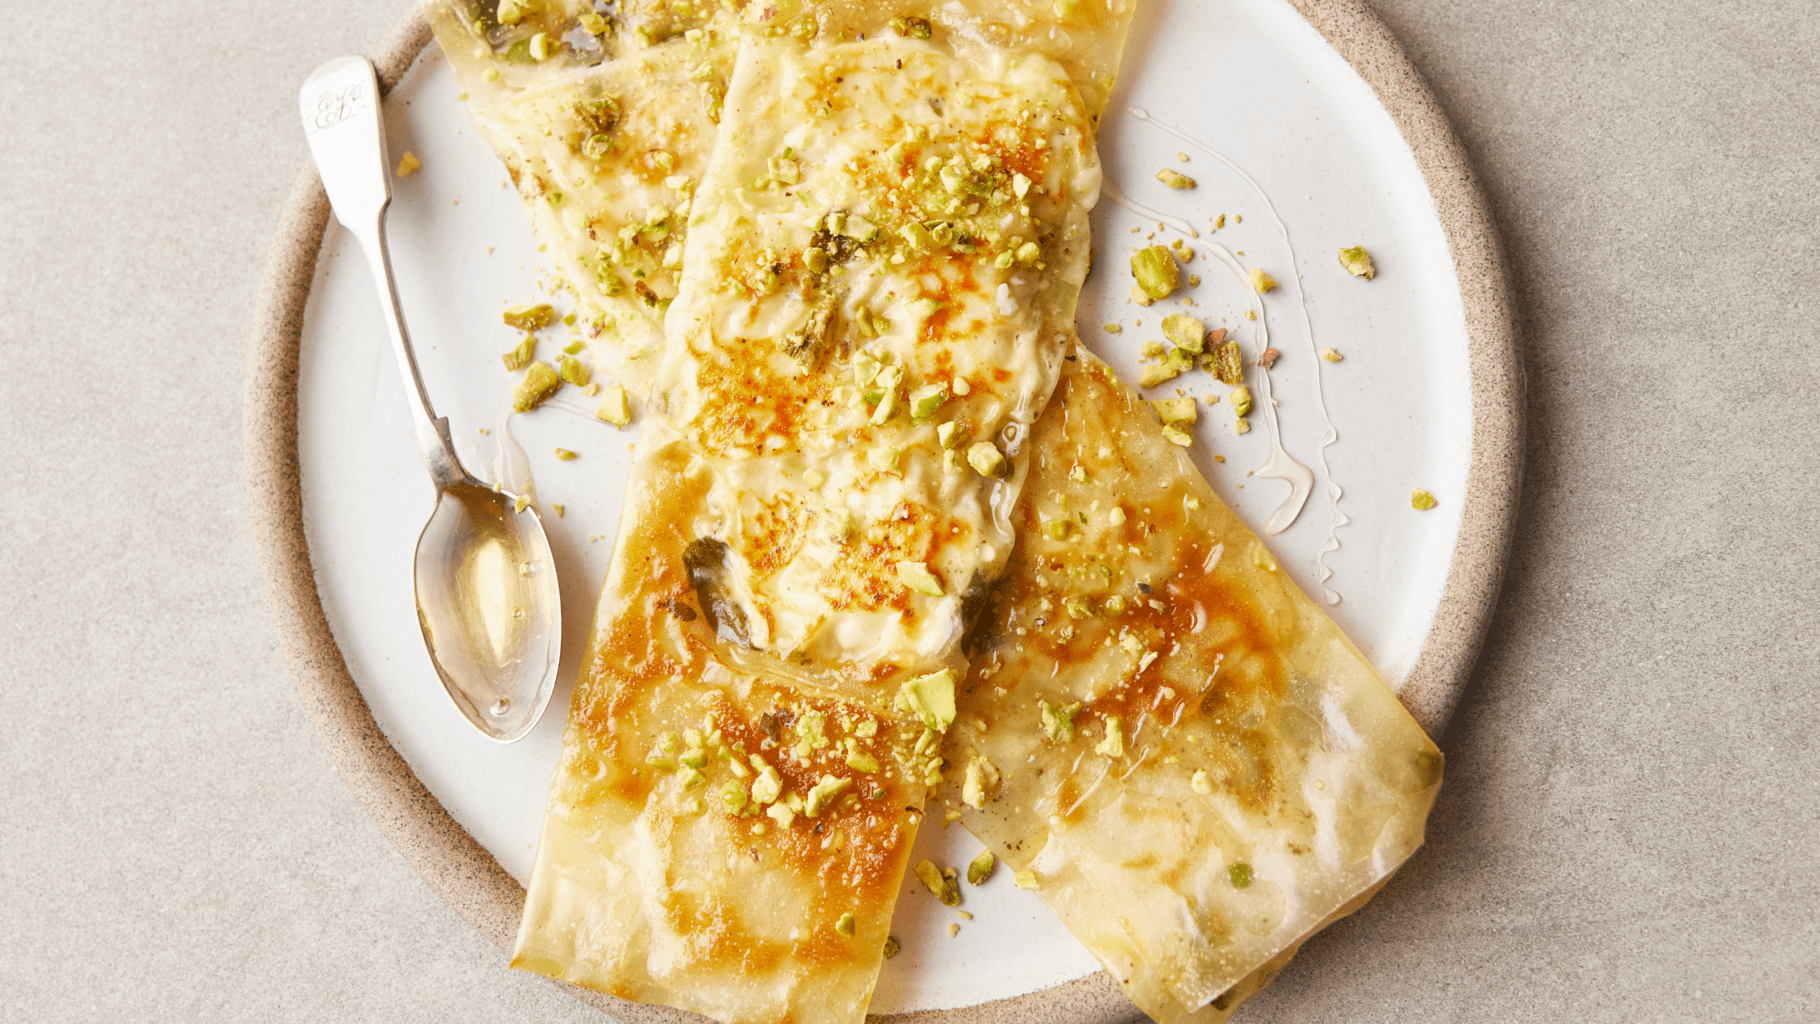 Feta Phyllo Turnovers excerpted from 5 Ingredients Mediterranean by Jamie Oliver.